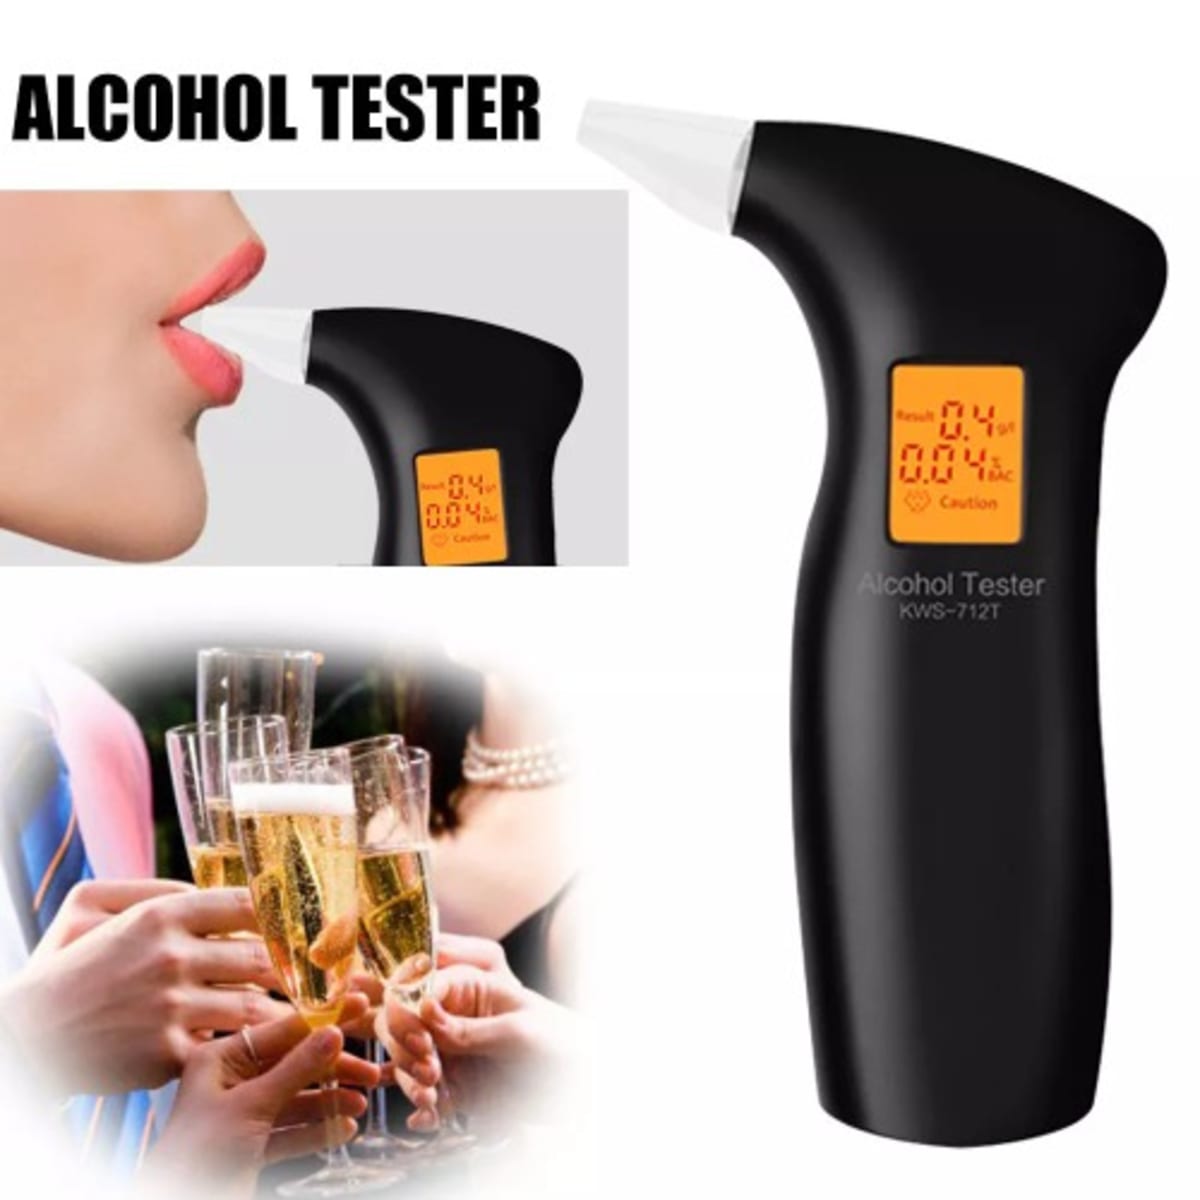 KWS-712T Electronic Breath Test Alcohol Tester & Analyzer